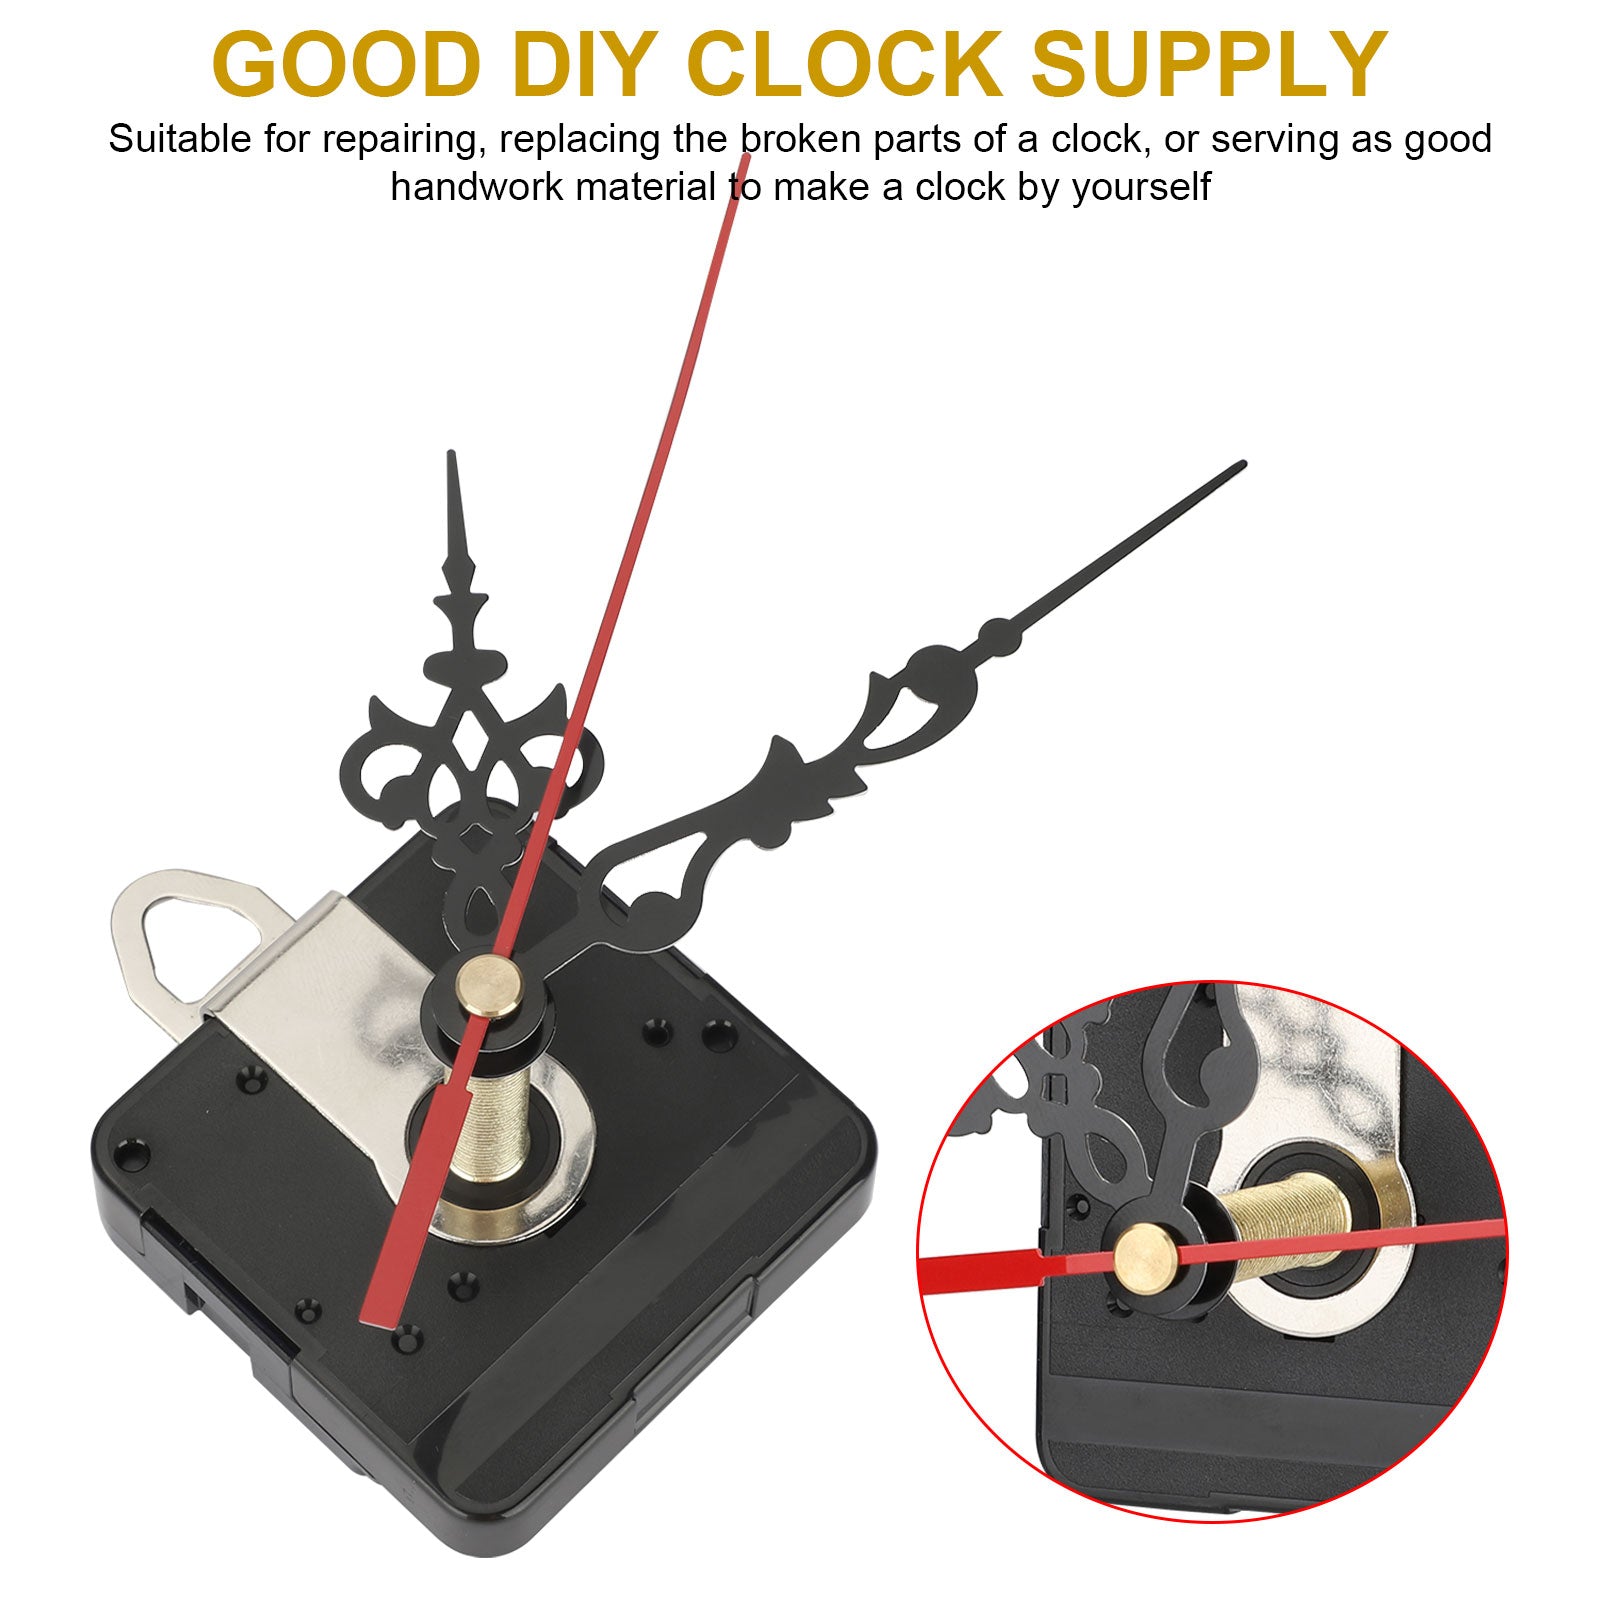 2 Pair Hands Quartz Clock Movement, DIY Wall Clock Movement Mechanism Clock Repair Parts Replacement (Shaft Length 1.2 Inch/ 31 mm)